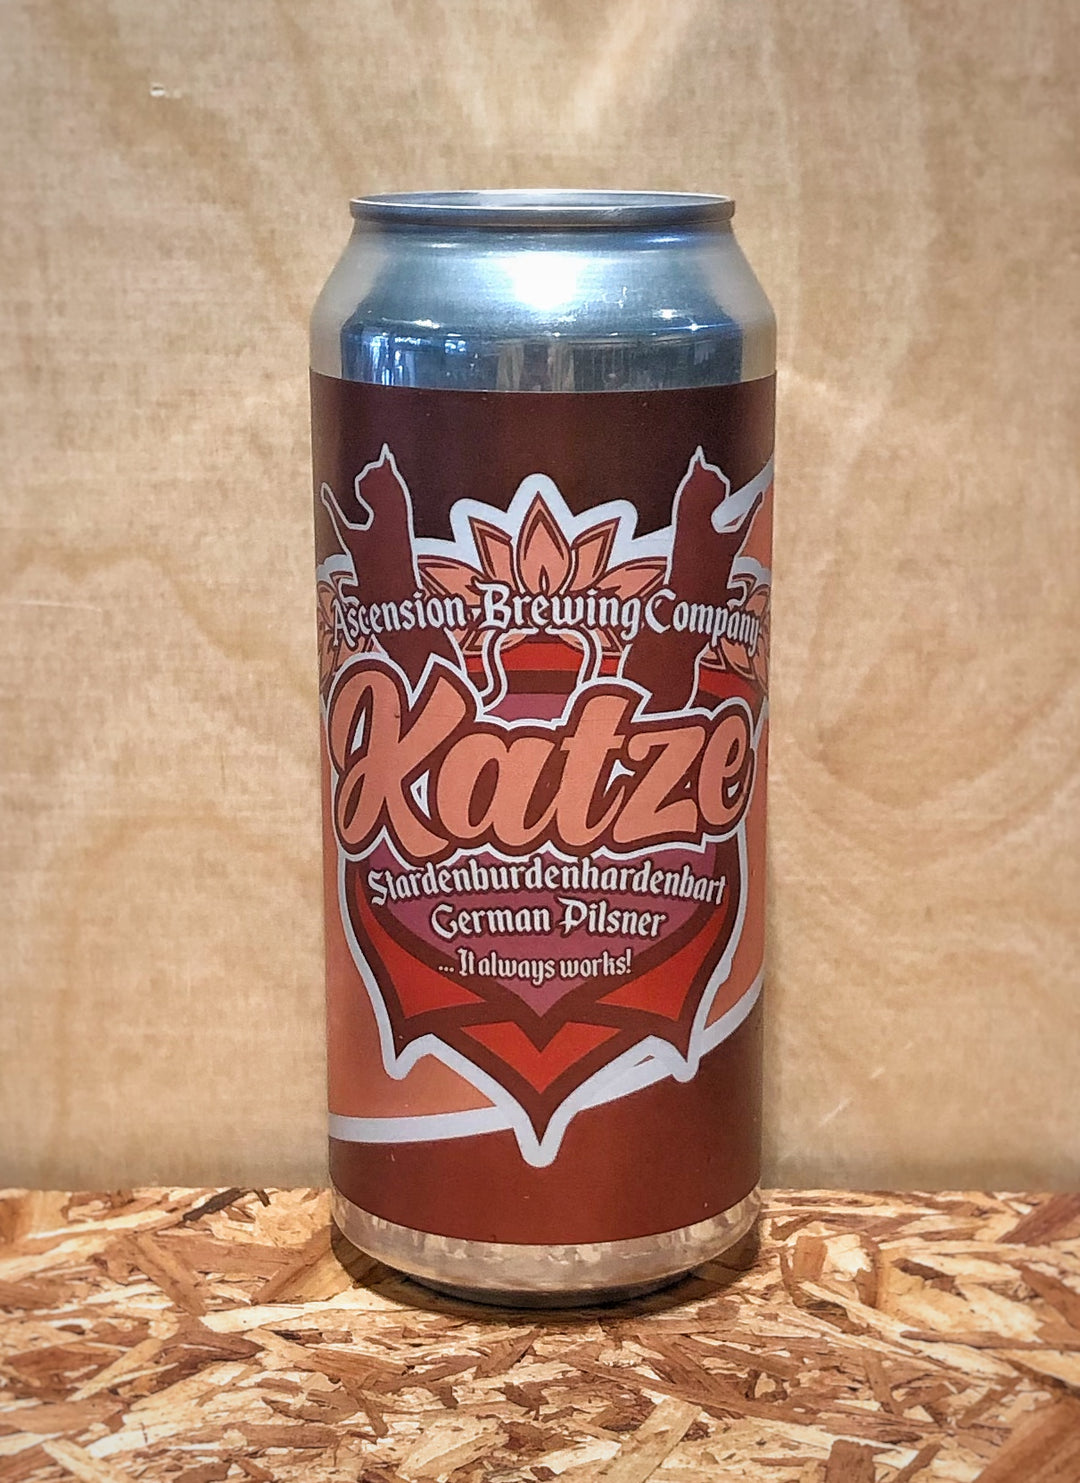 Ascension Brewing Company 'Katze' German Pilsner (Novi, MI)